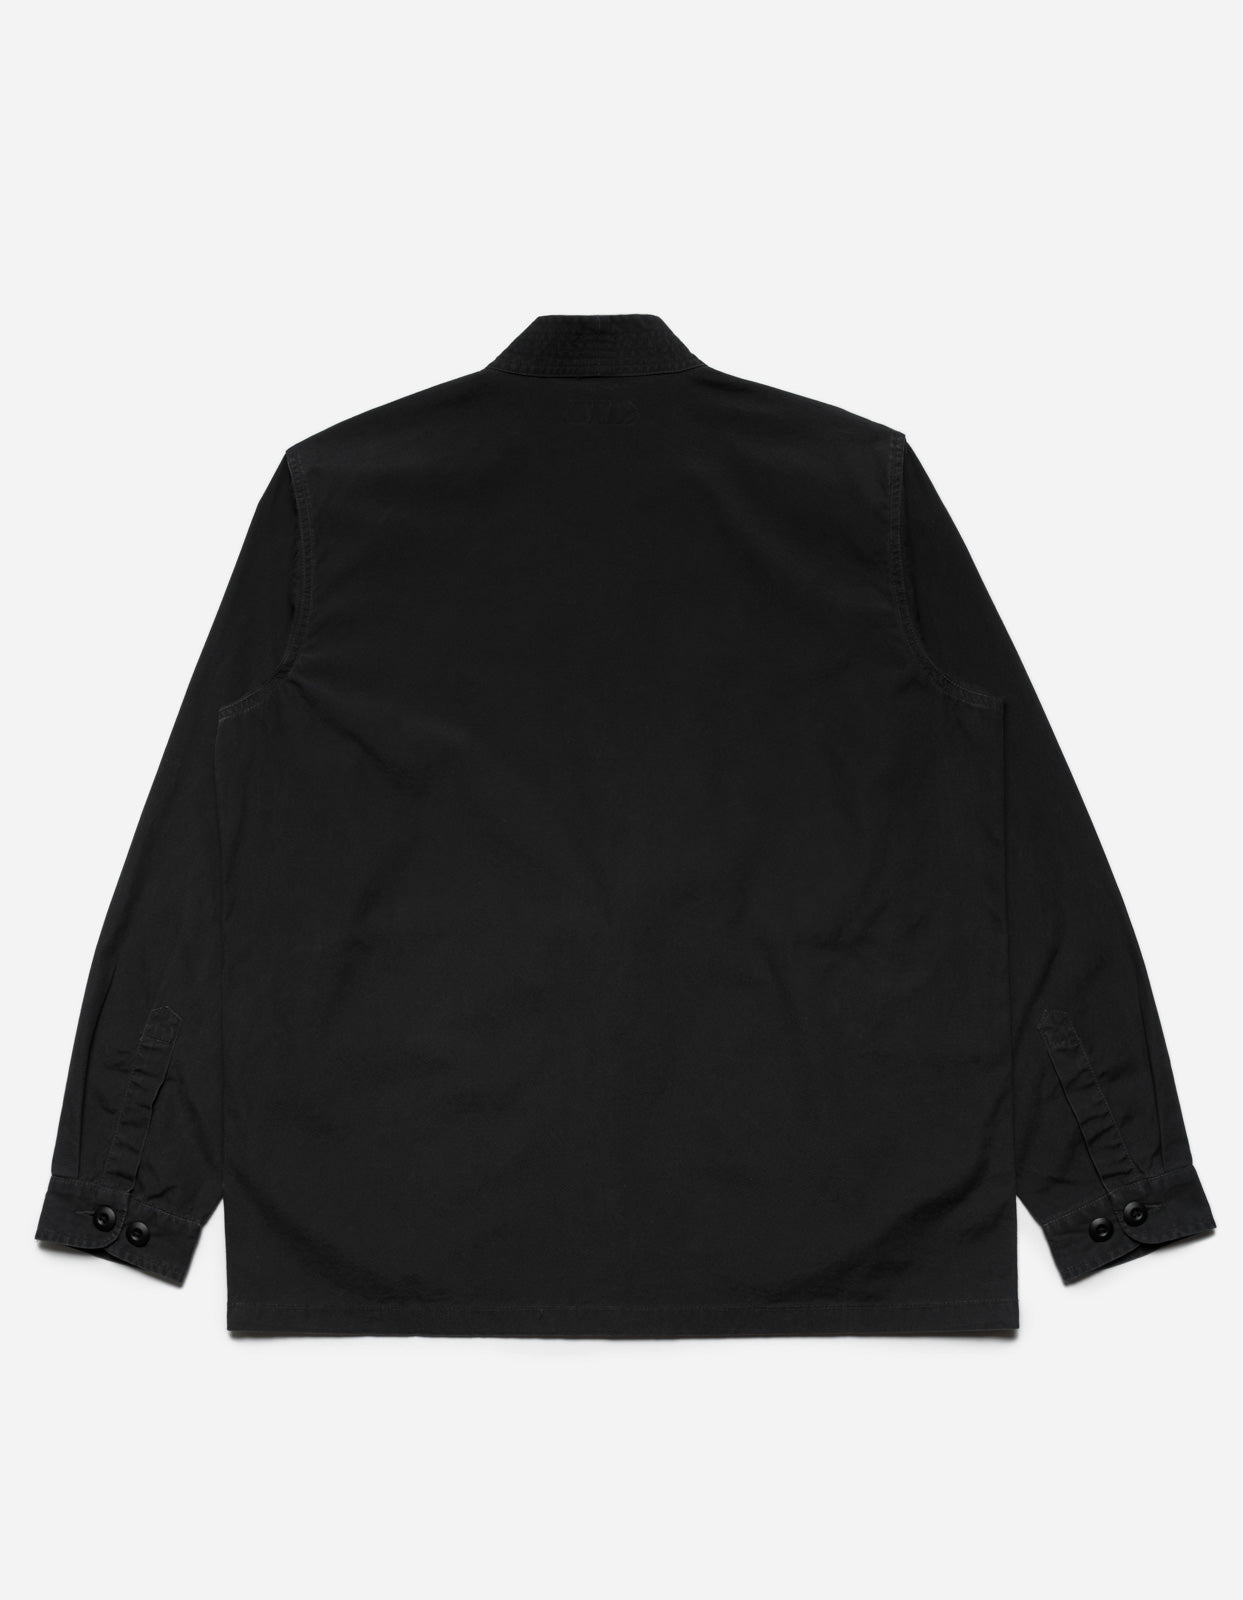 8190 U.S. Hanten Shirt Black BLK-108F